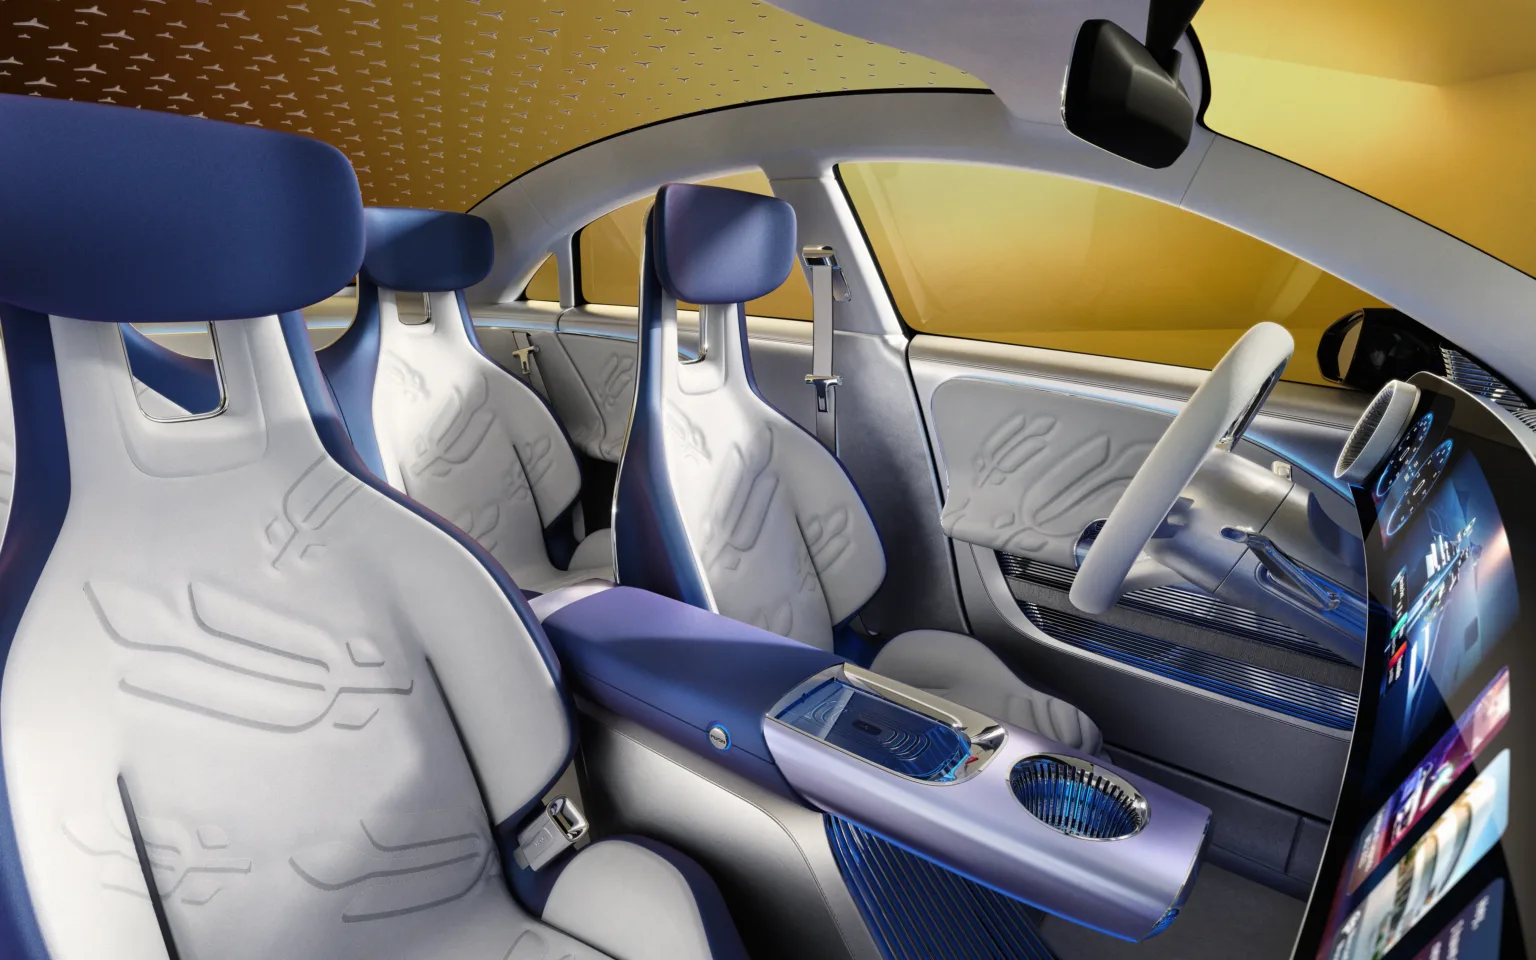 Mercedes-Benz Concept CLA Class Interior Image 2